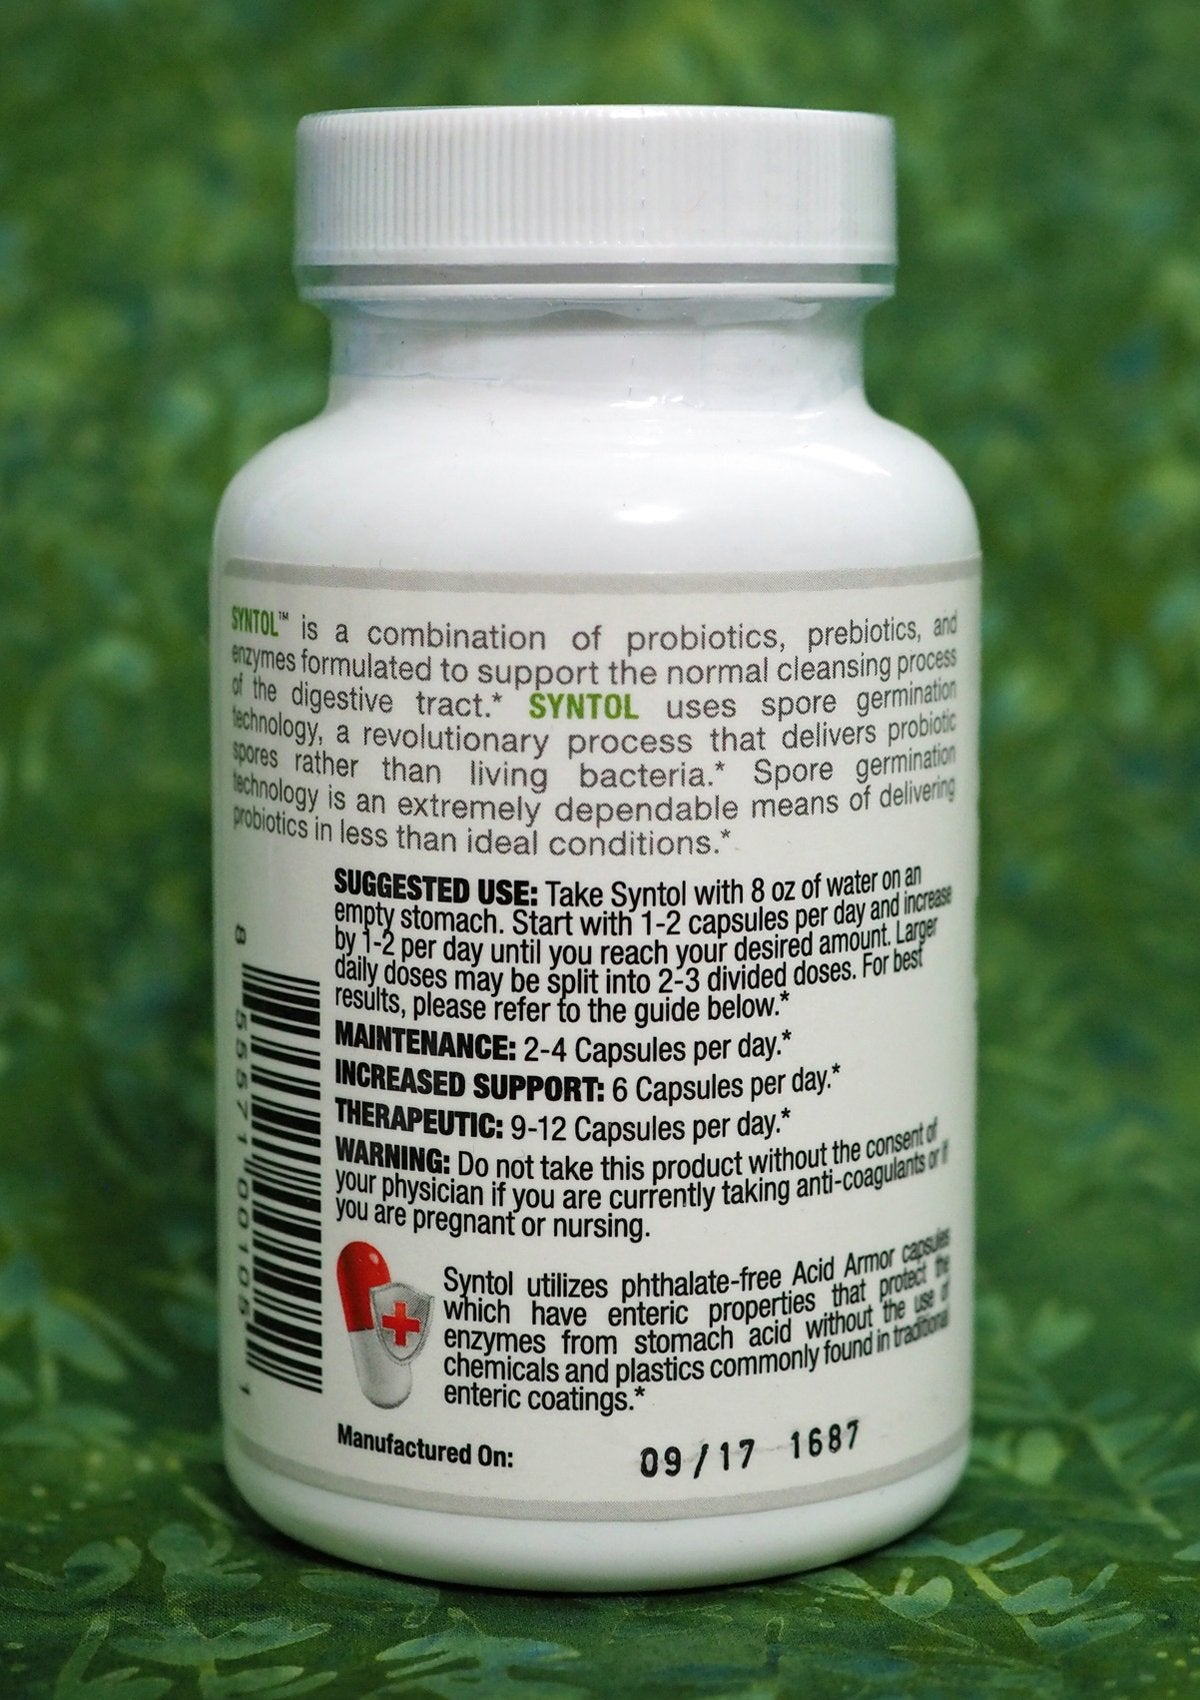 Syntol AMD, A Probiotic, Prebiotic, Enzyme Blend in a 90 Capsule Bottle